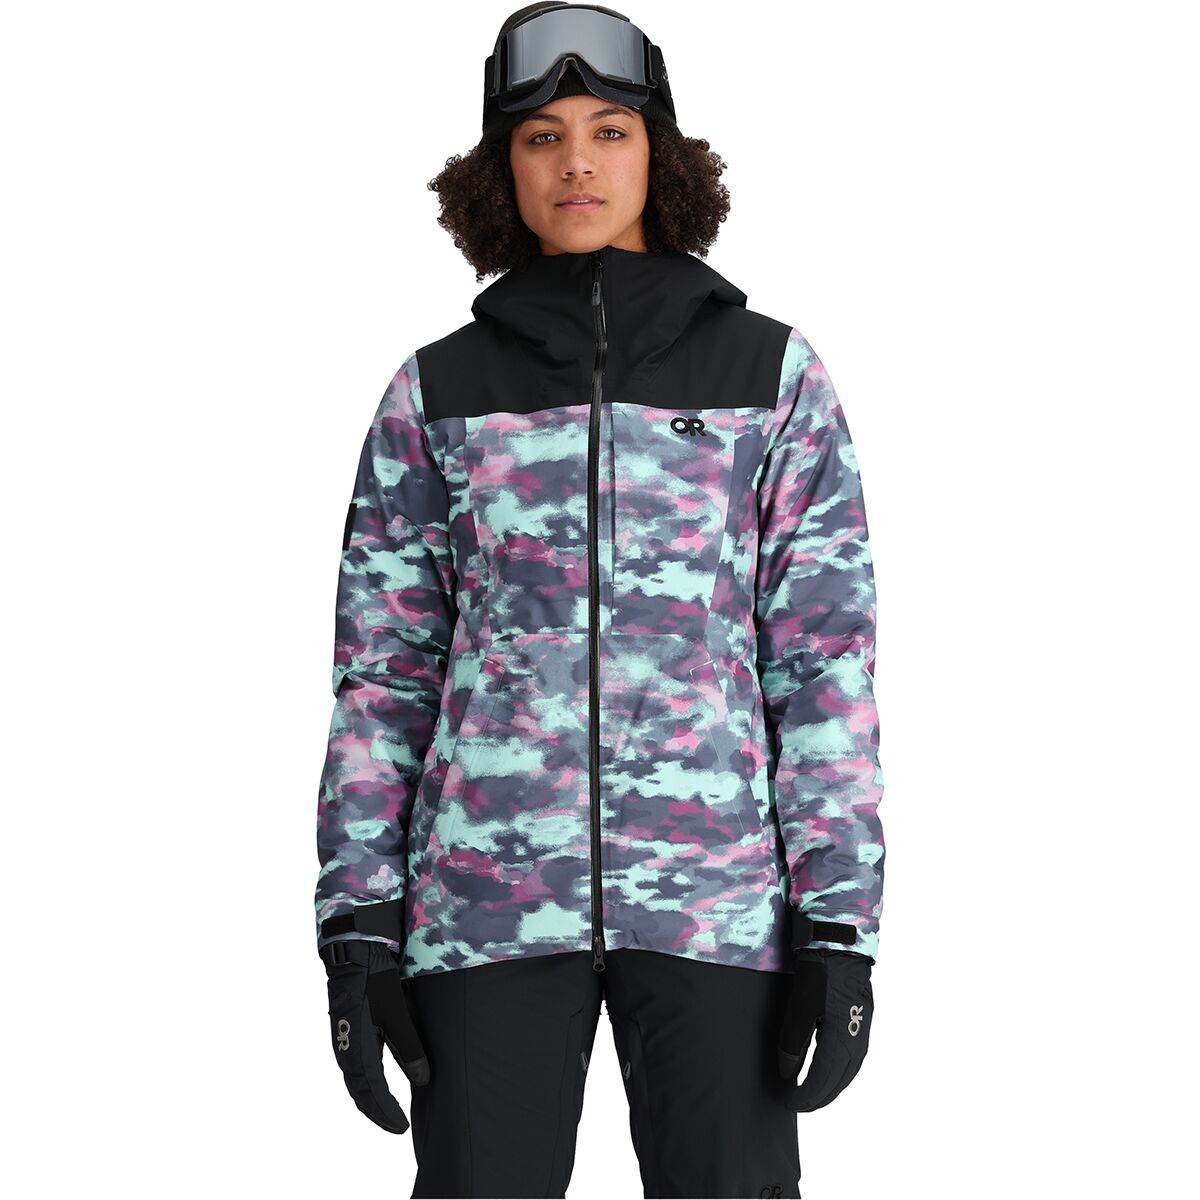 Outdoor Research Snowcrew Jacket - Women's Calcite Camo/Black